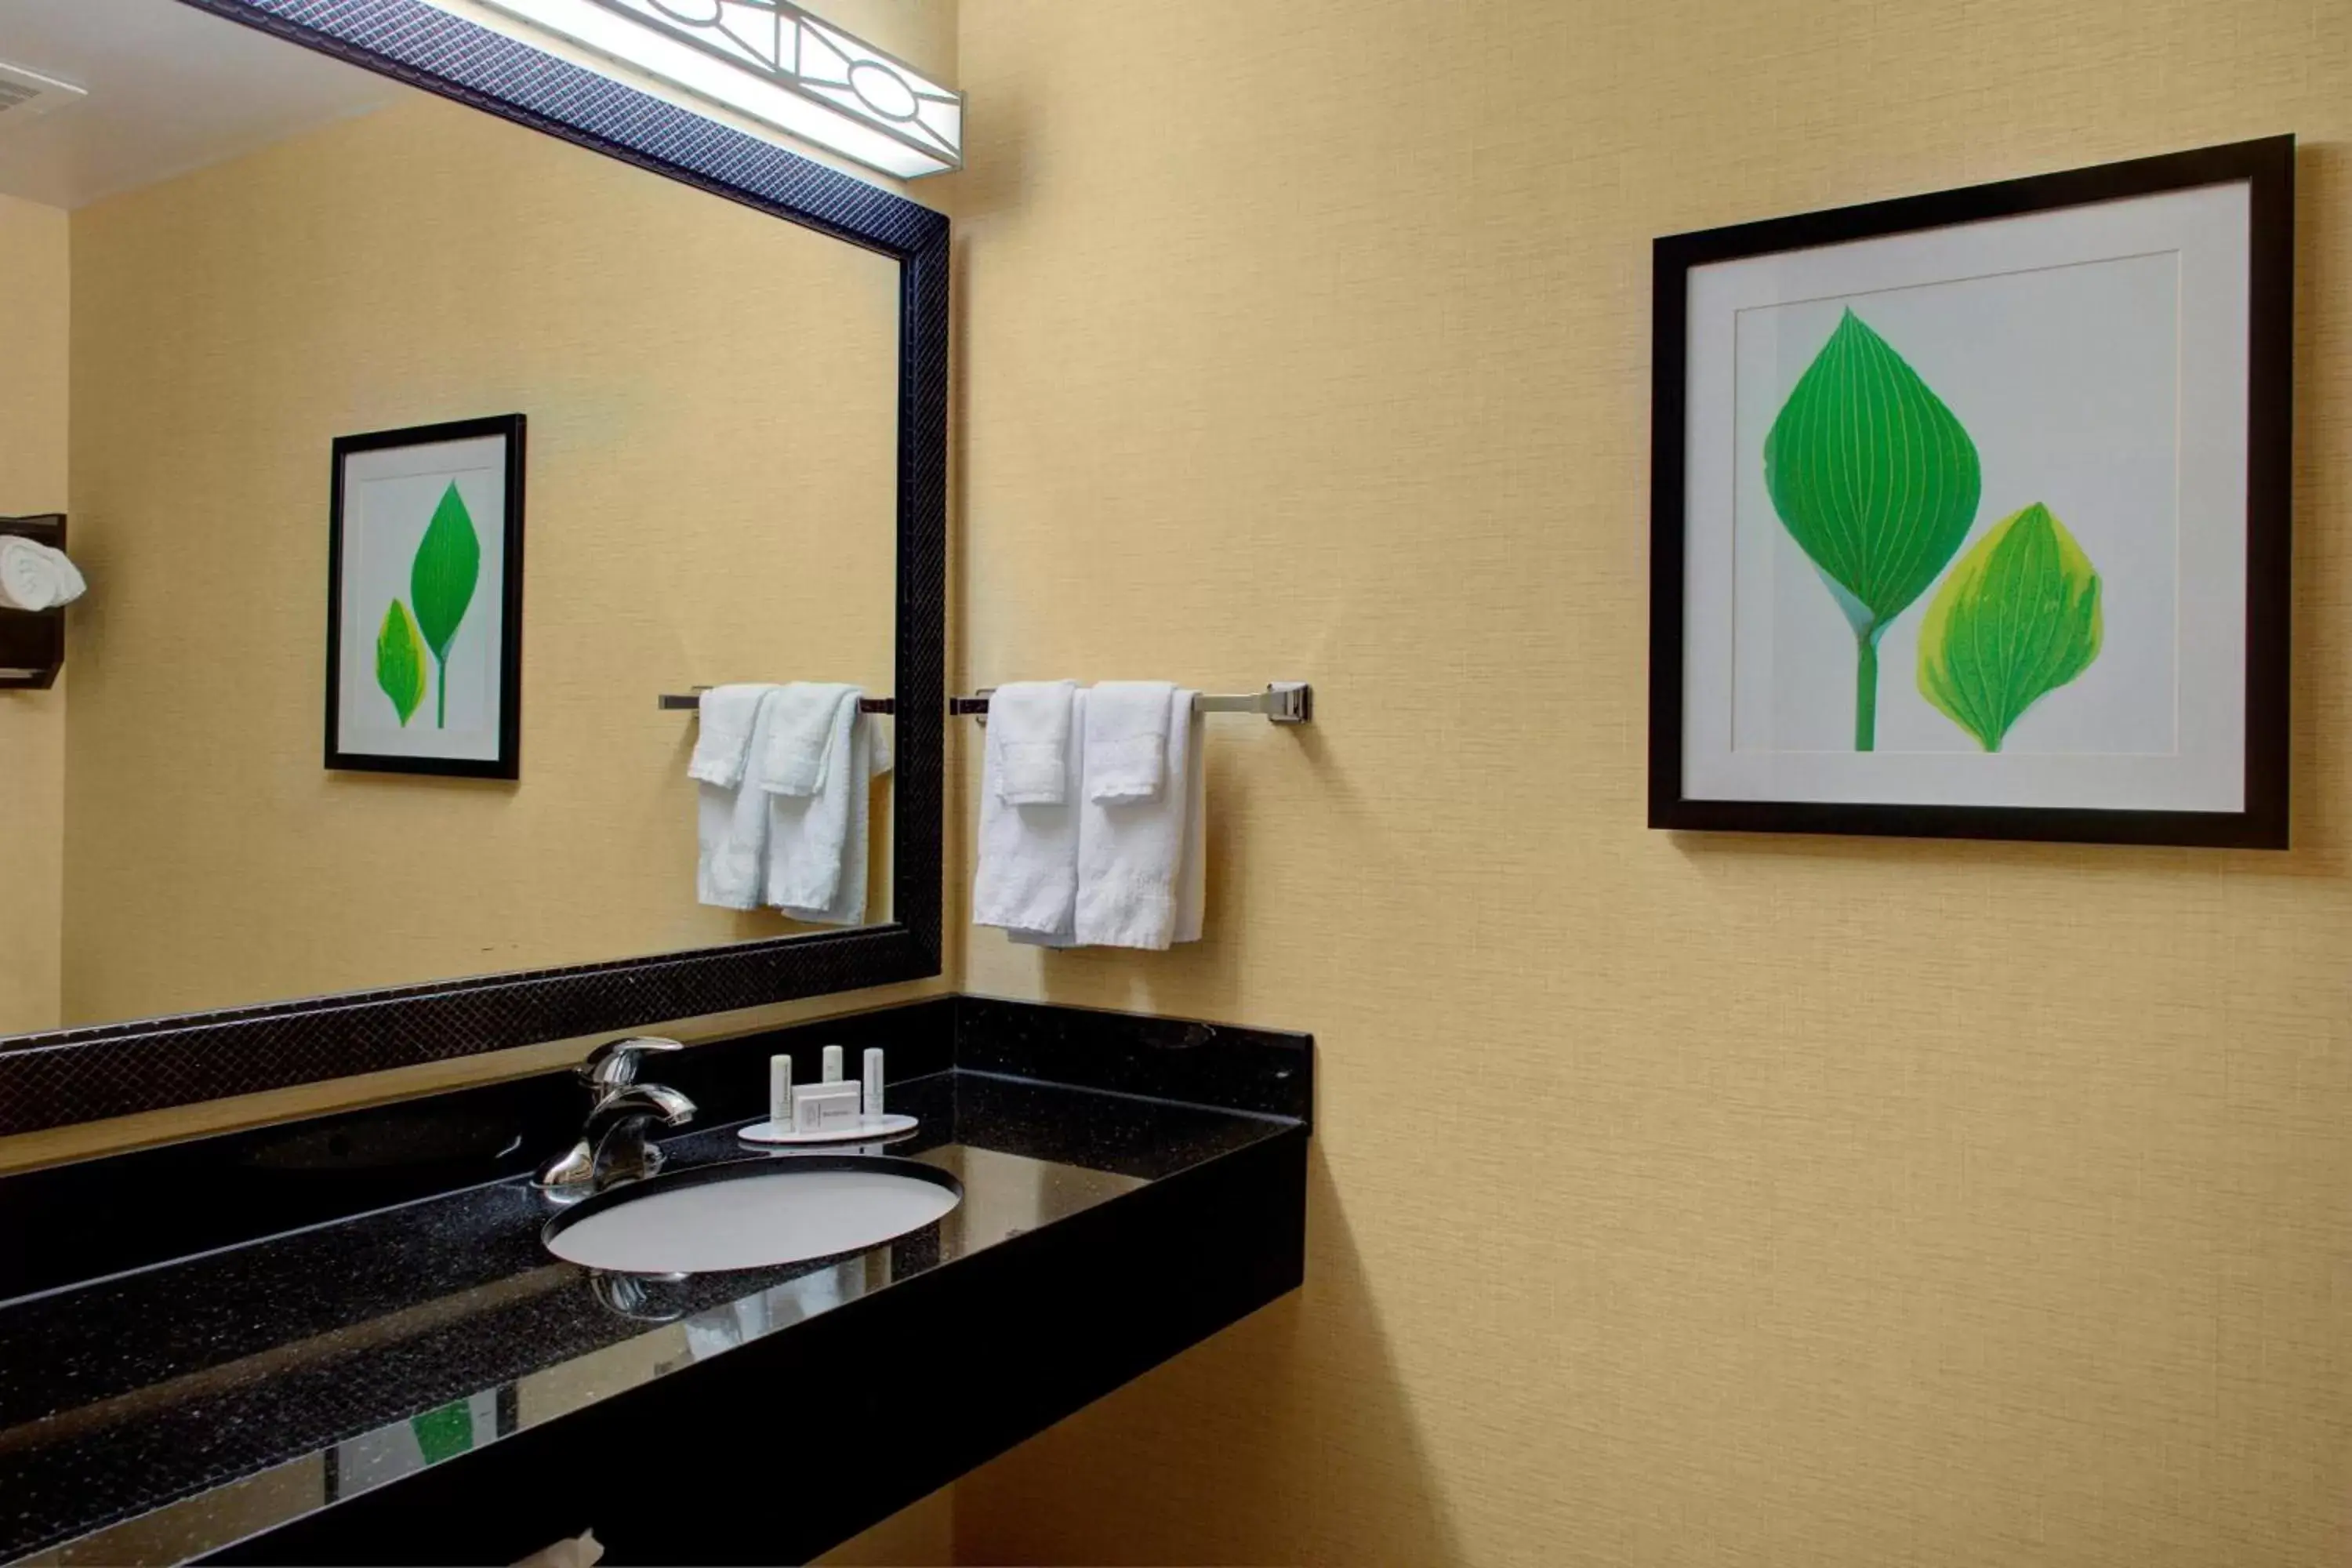 Bathroom in Fairfield Inn and Suites by Marriott Montgomery EastChase